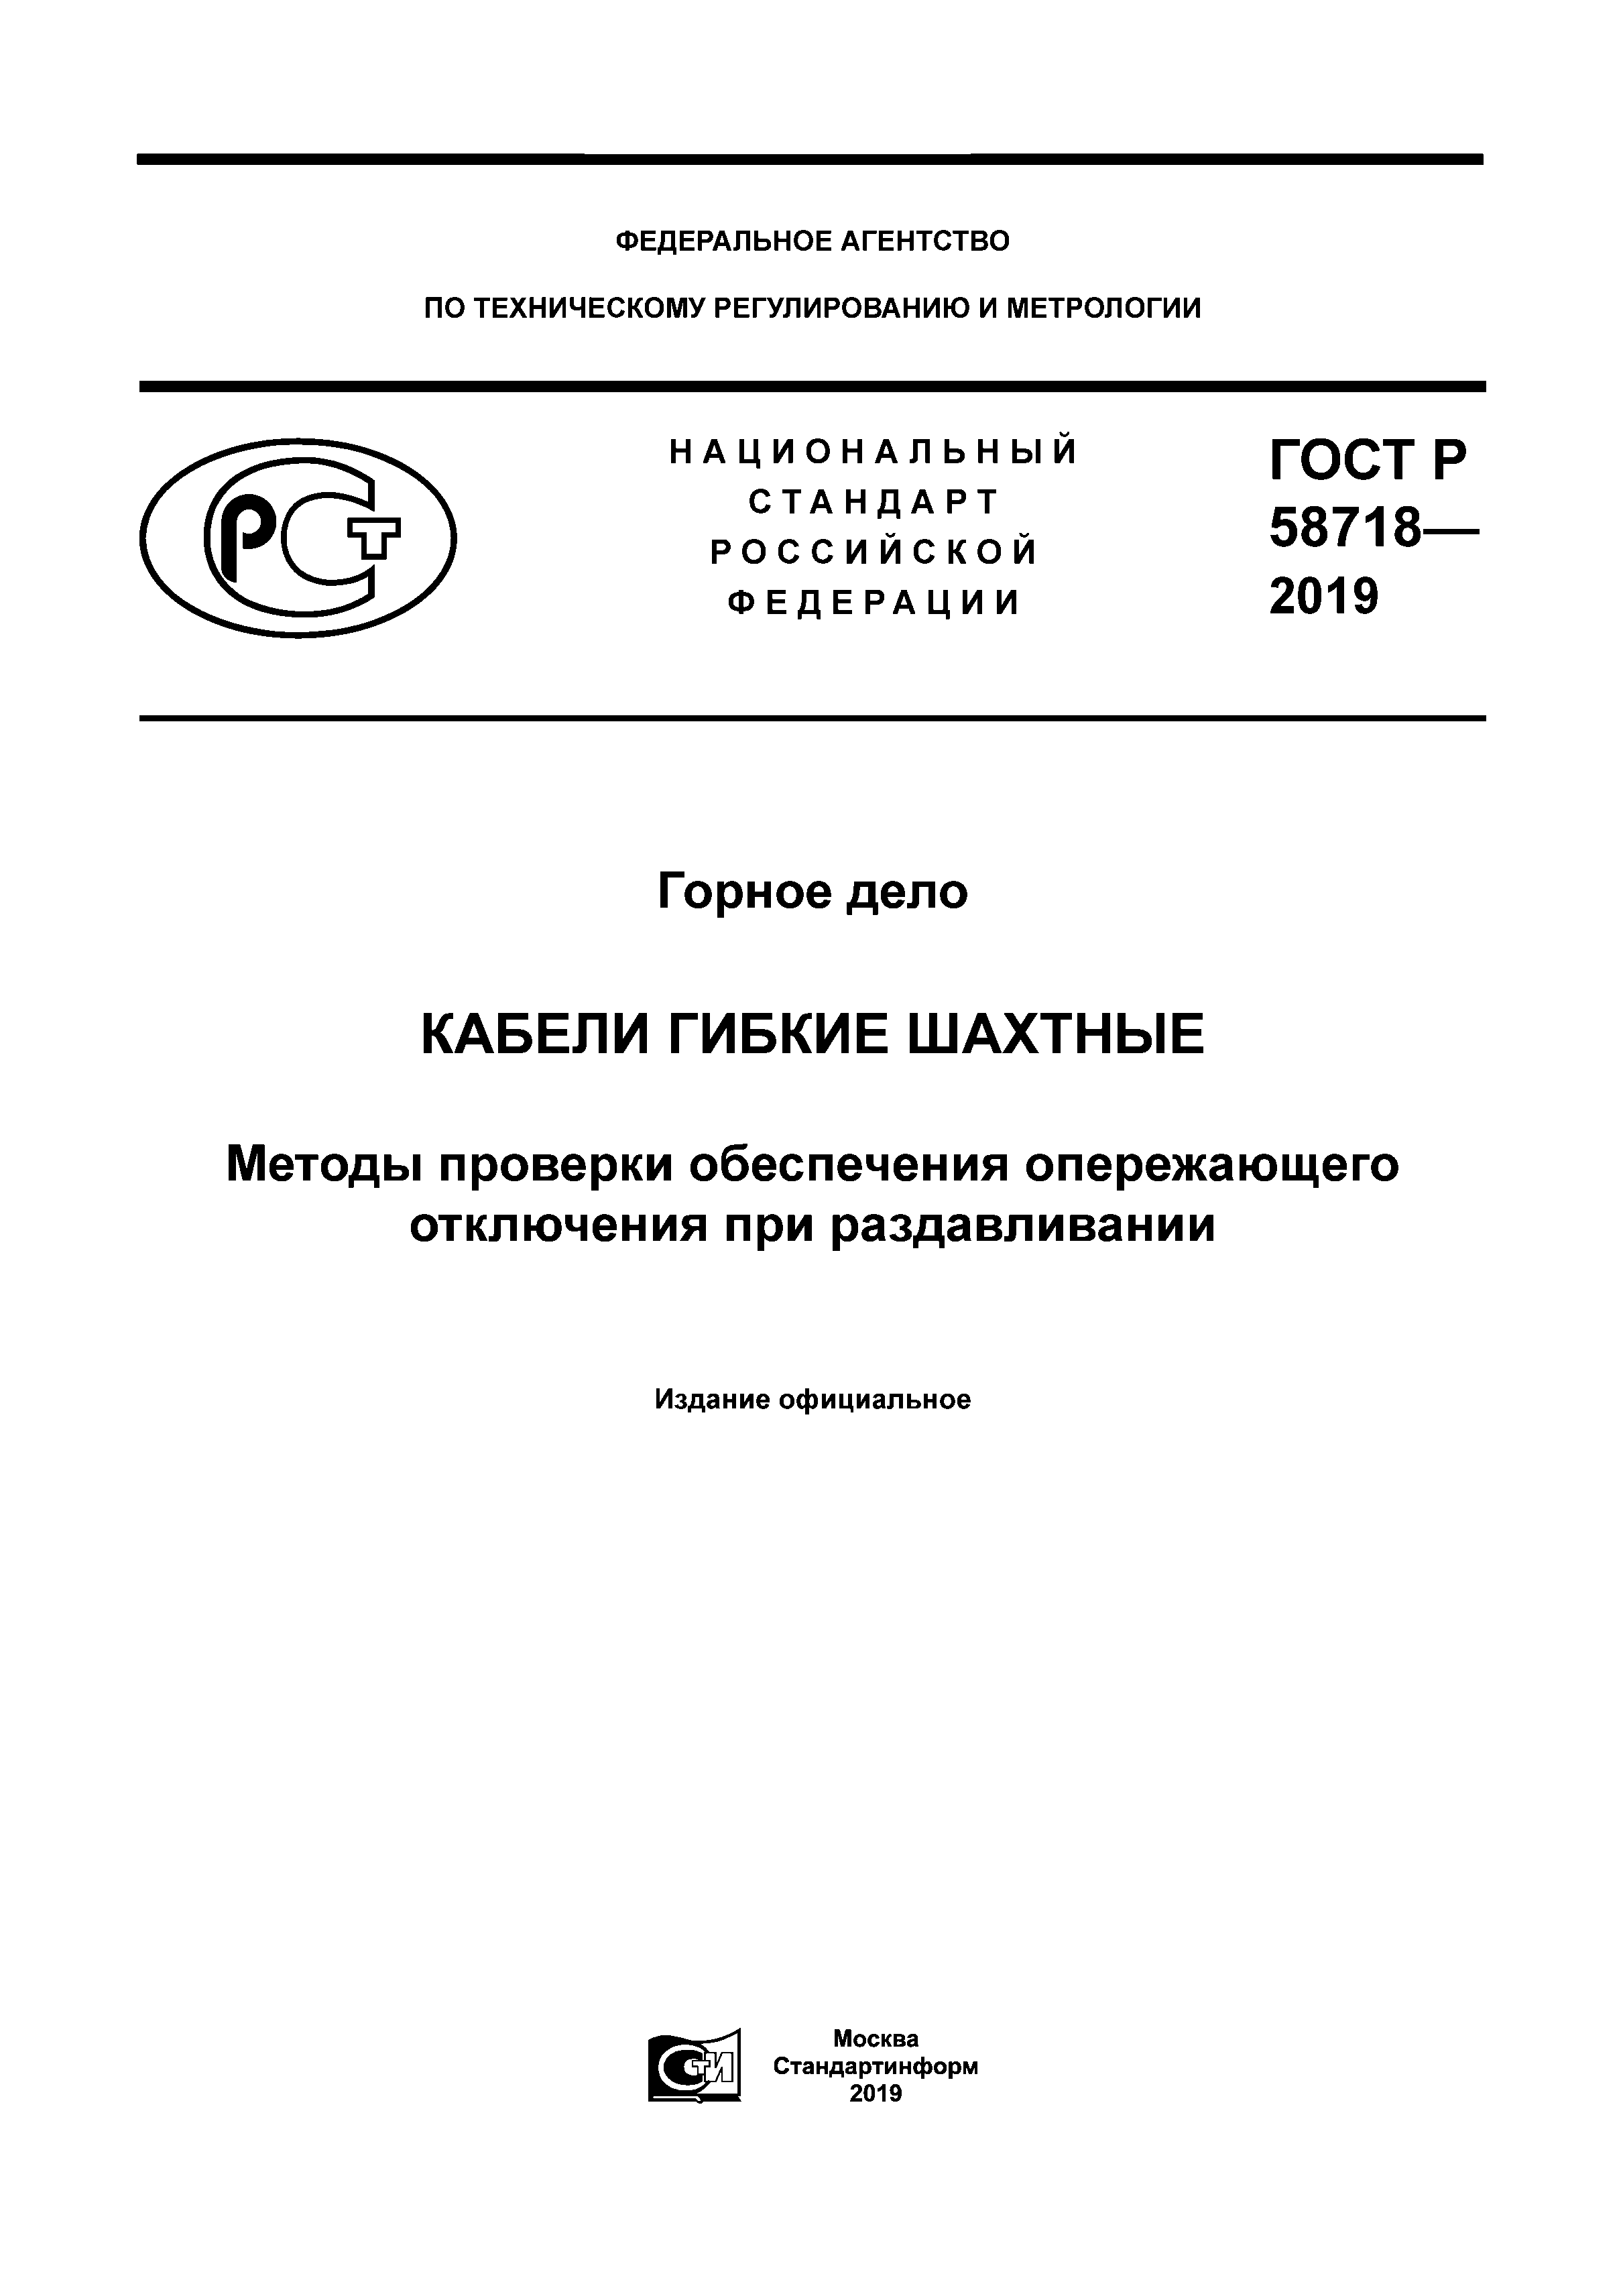 ГОСТ Р 58718-2019